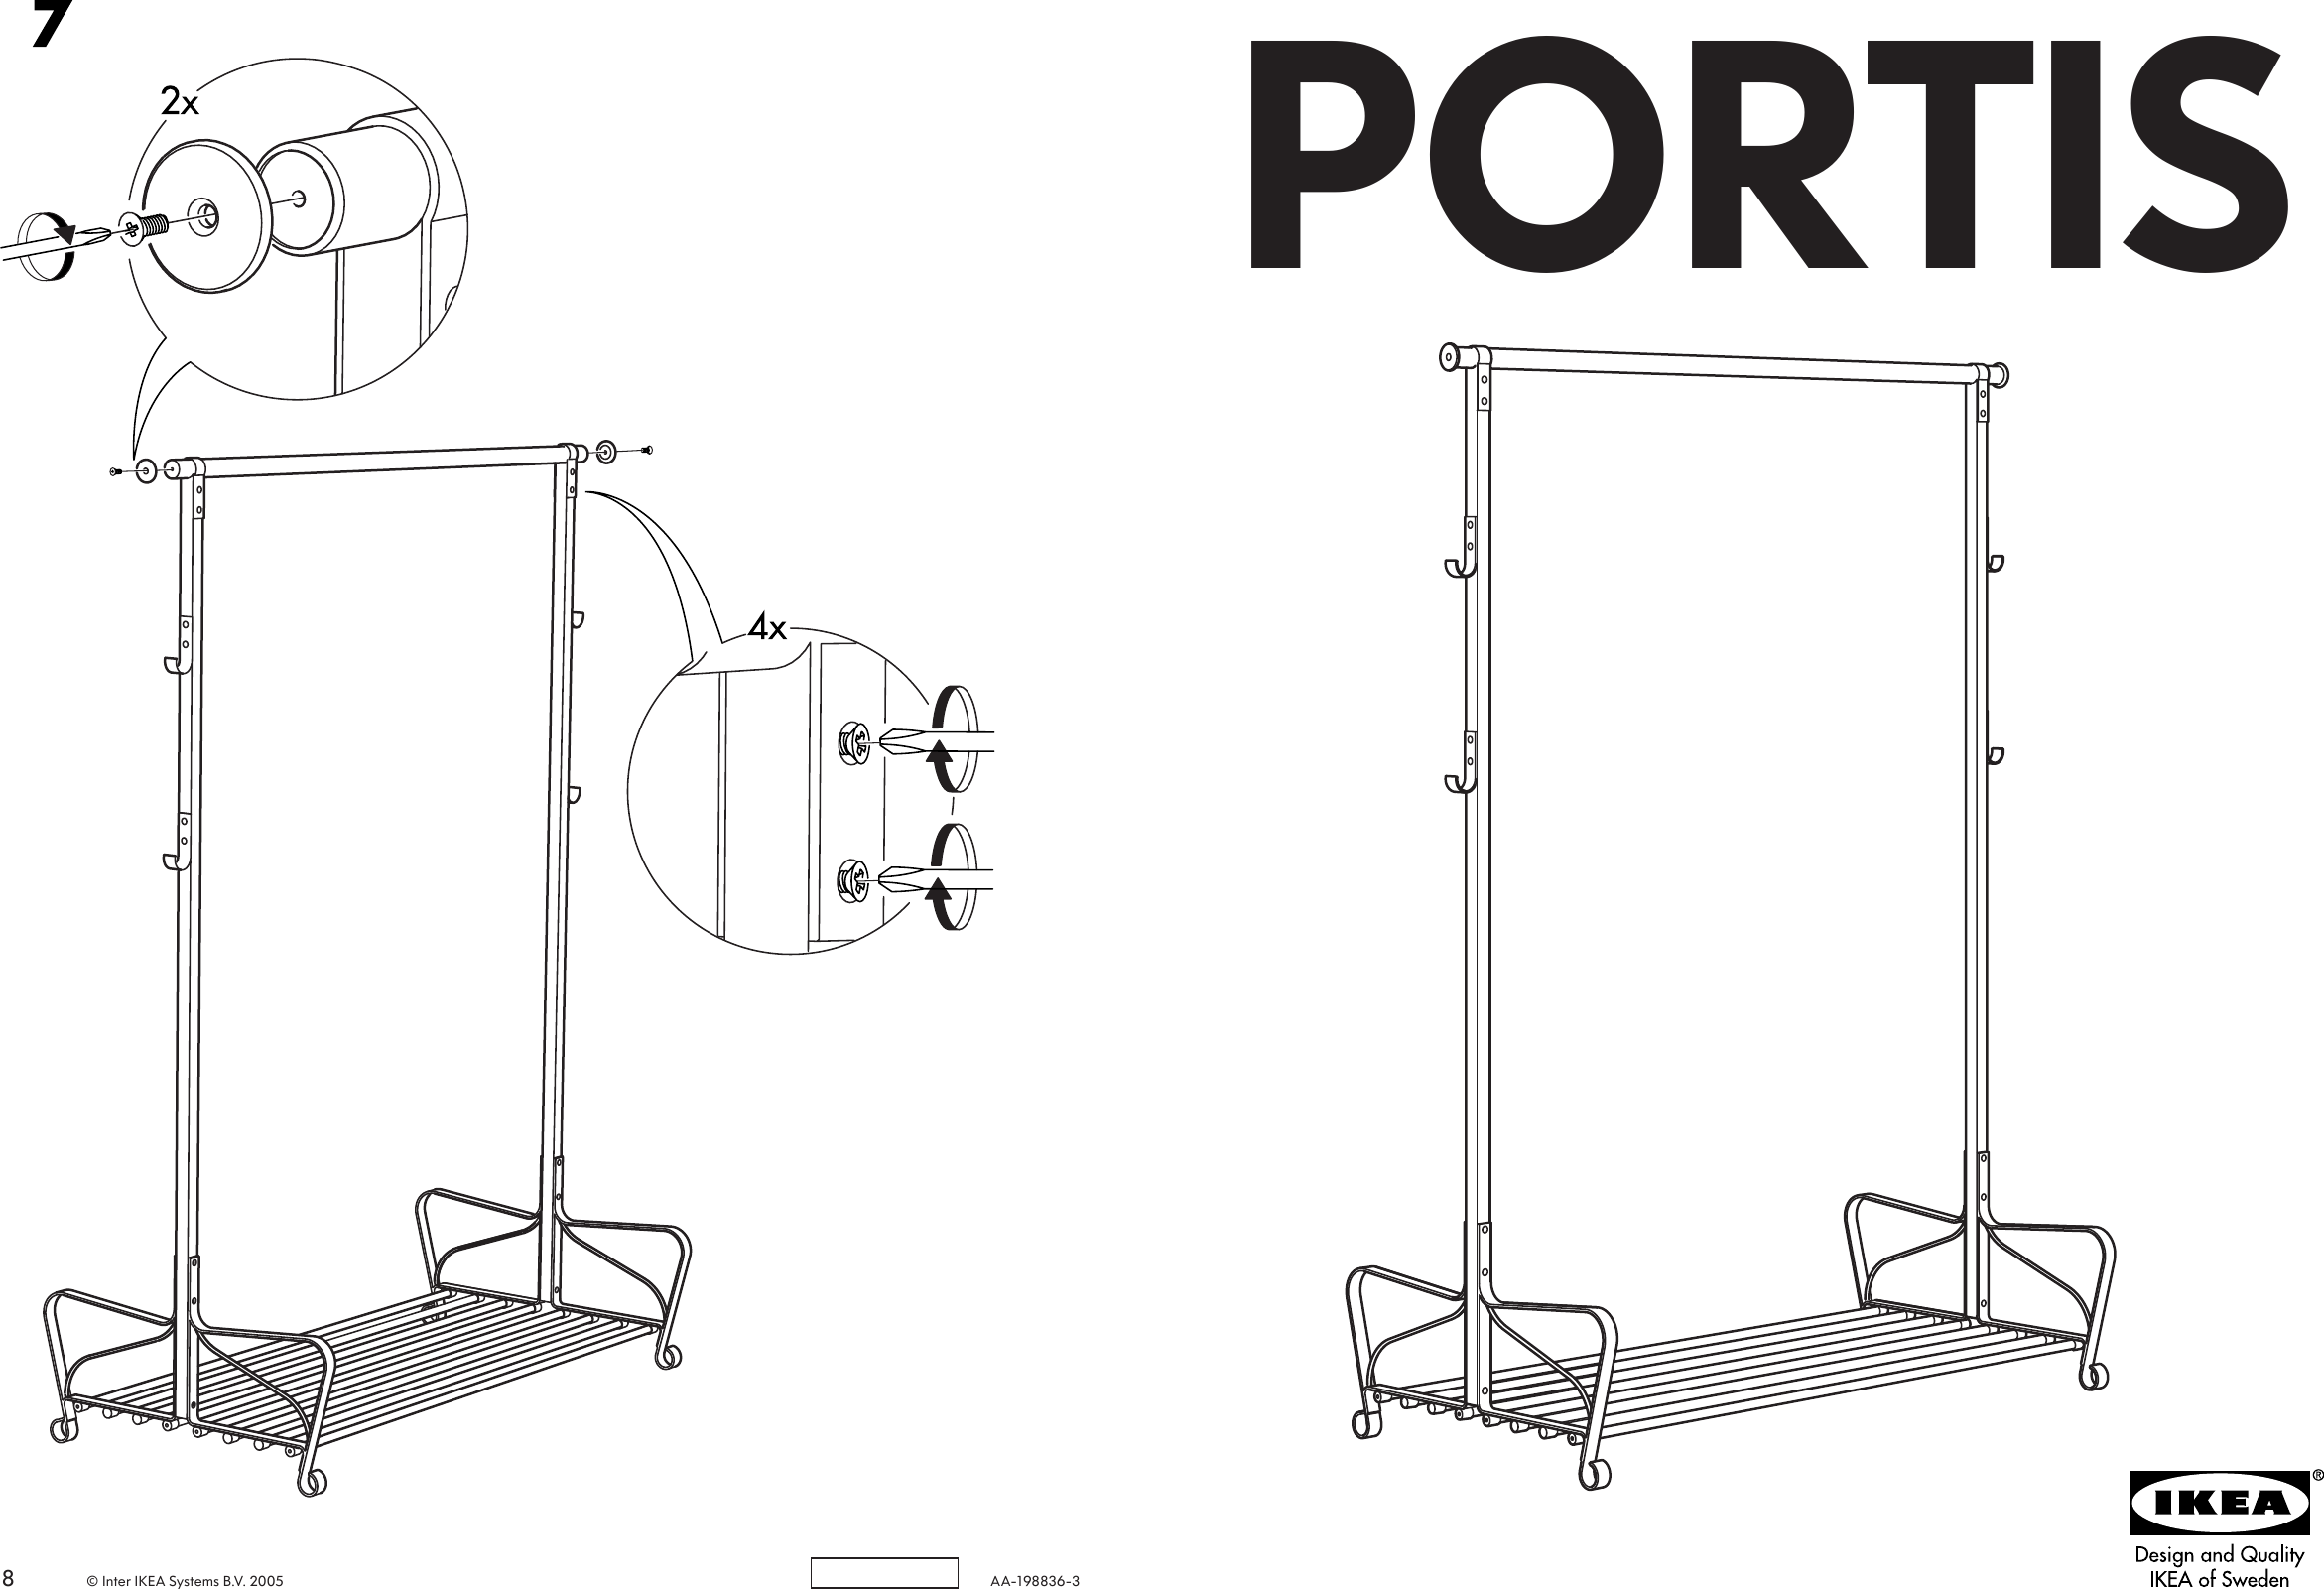 Ikea Portis Портис